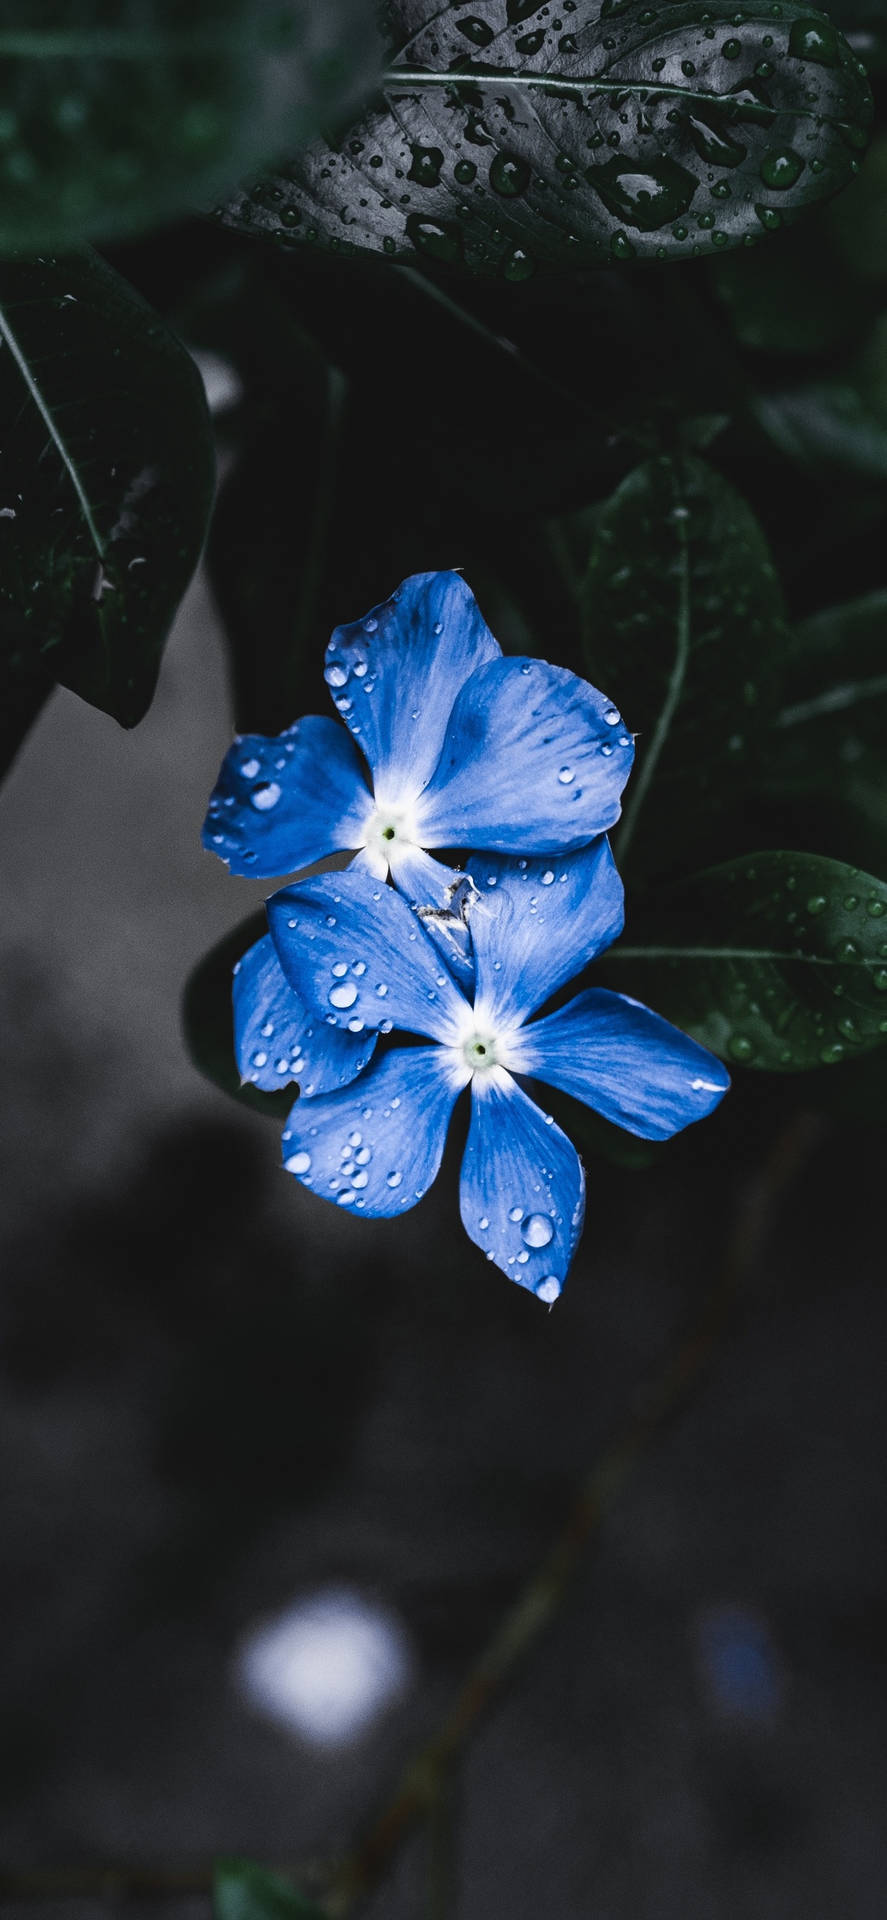 Enblå Blomma Med Vattendroppar På Den Wallpaper